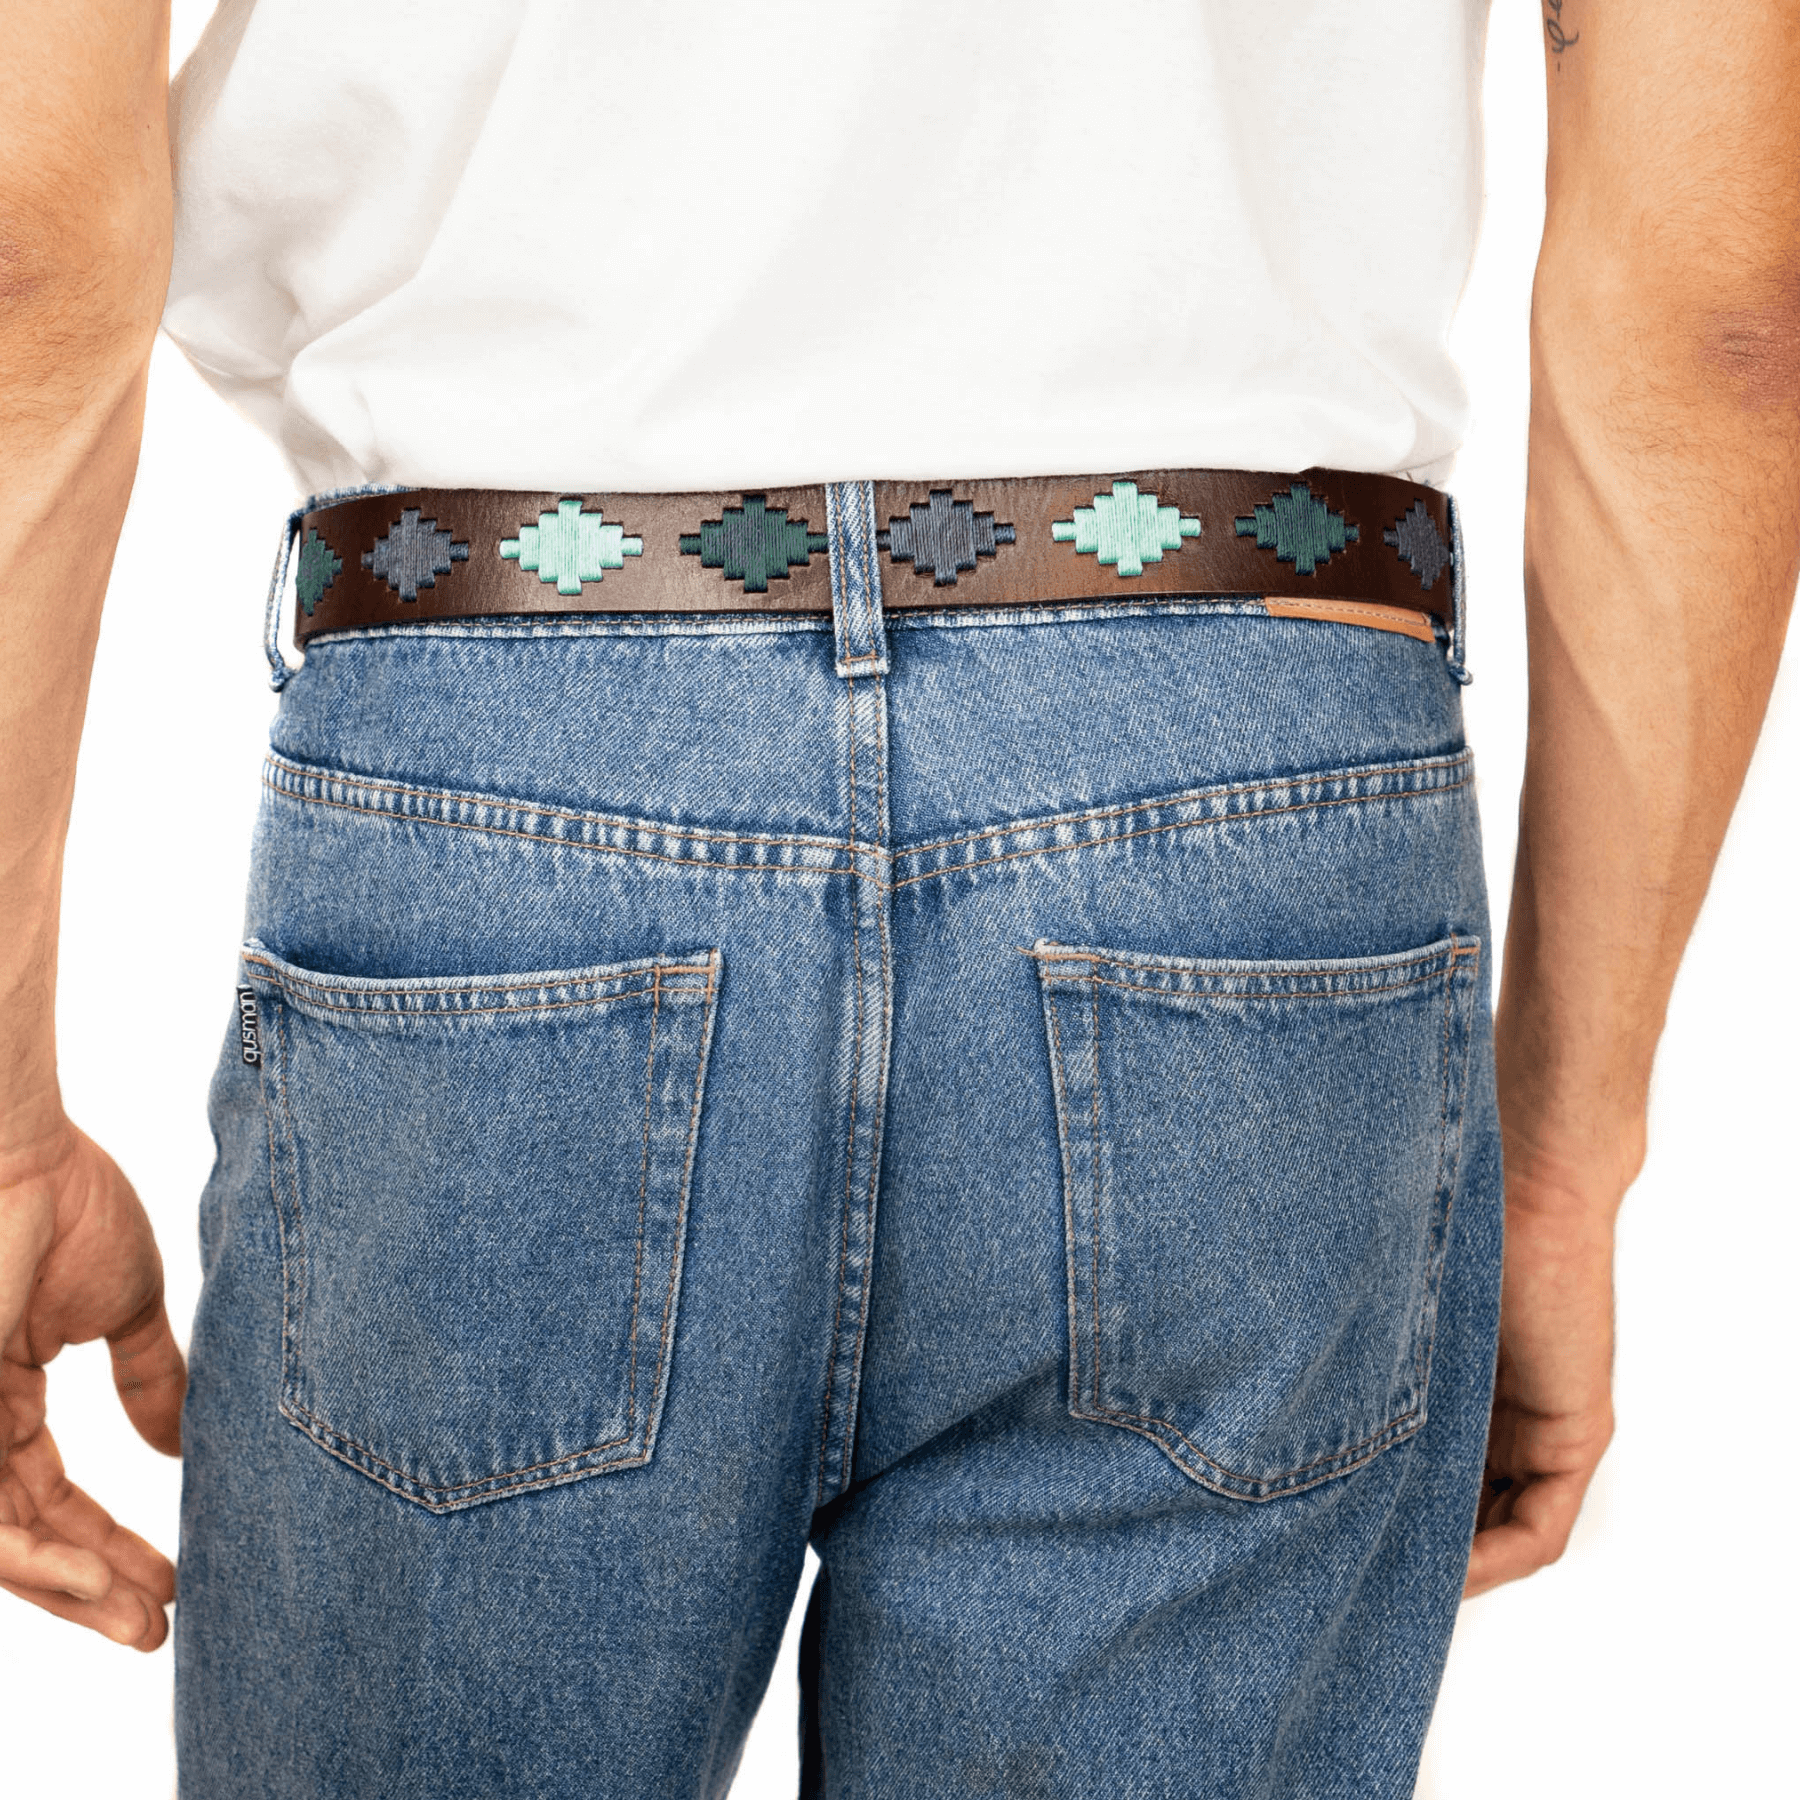 Gaucholife Belts Embroidered Belt (Green/Blue)